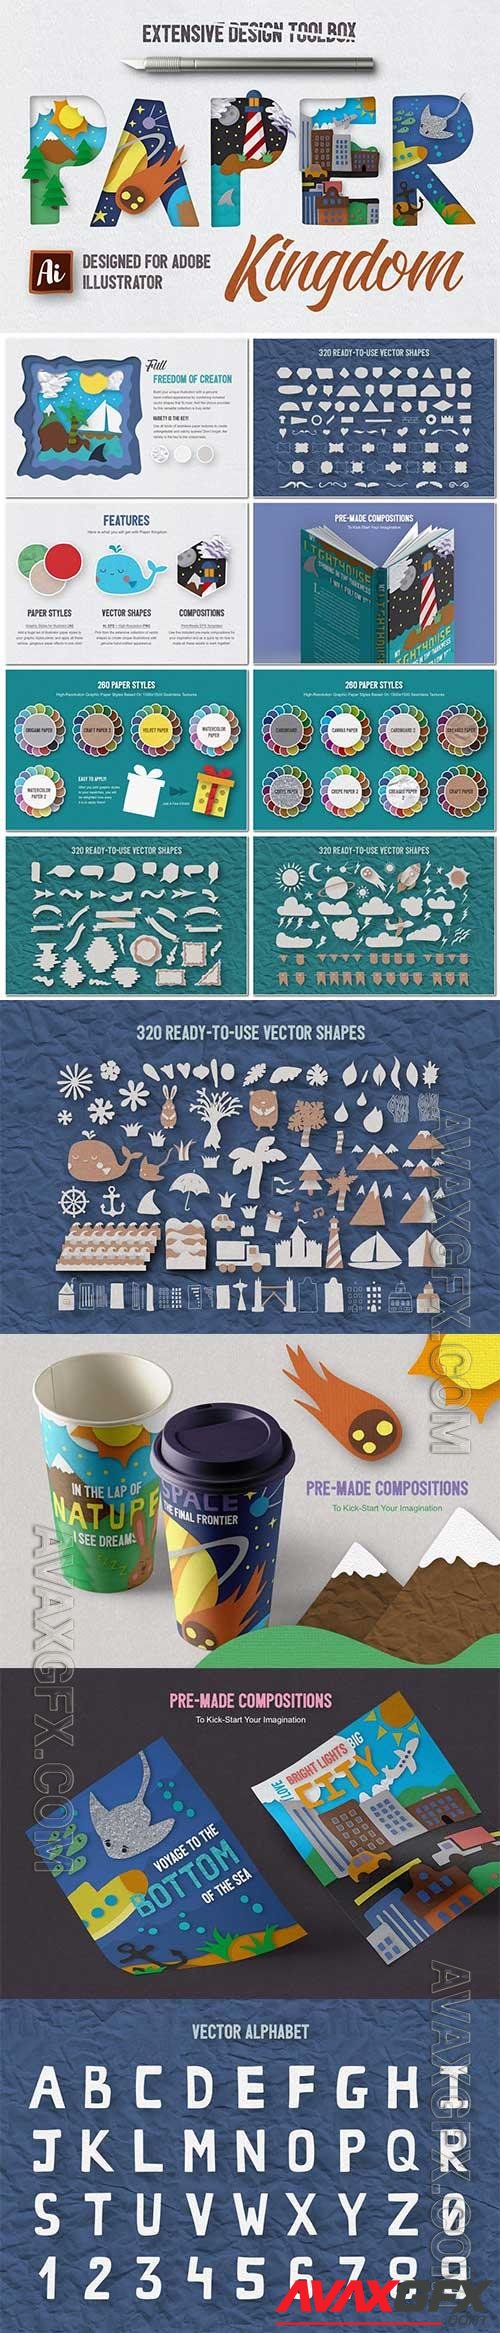 Paper Kingdom Illustrator Graphic Styles